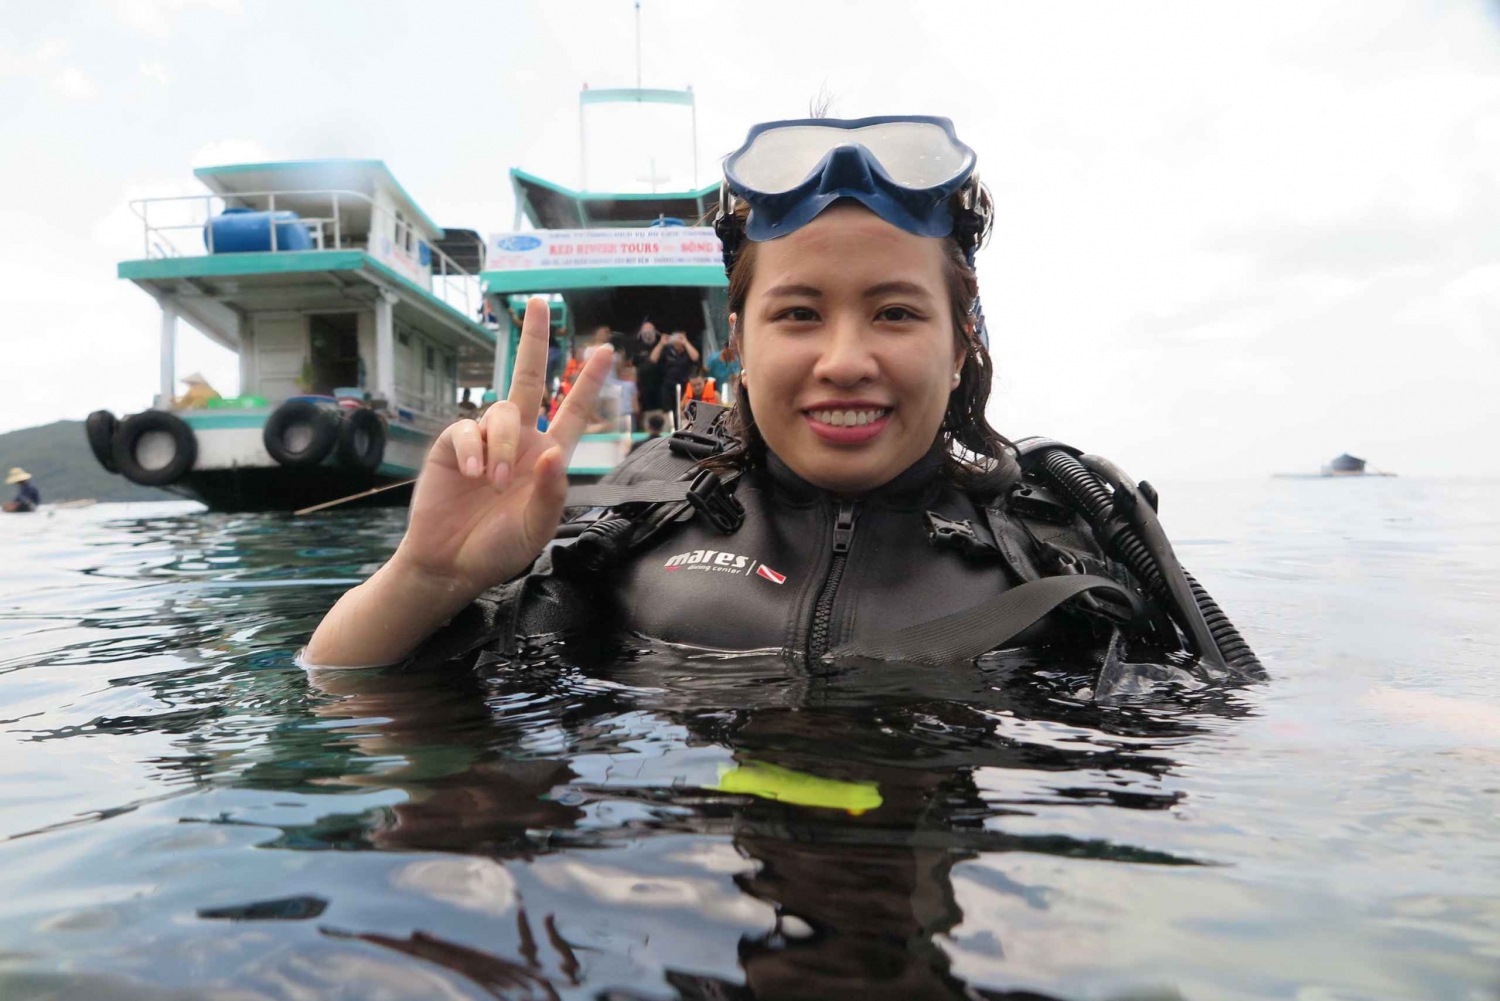 Phu Quoc: Scuba Diving for PADI Divers or Beginners